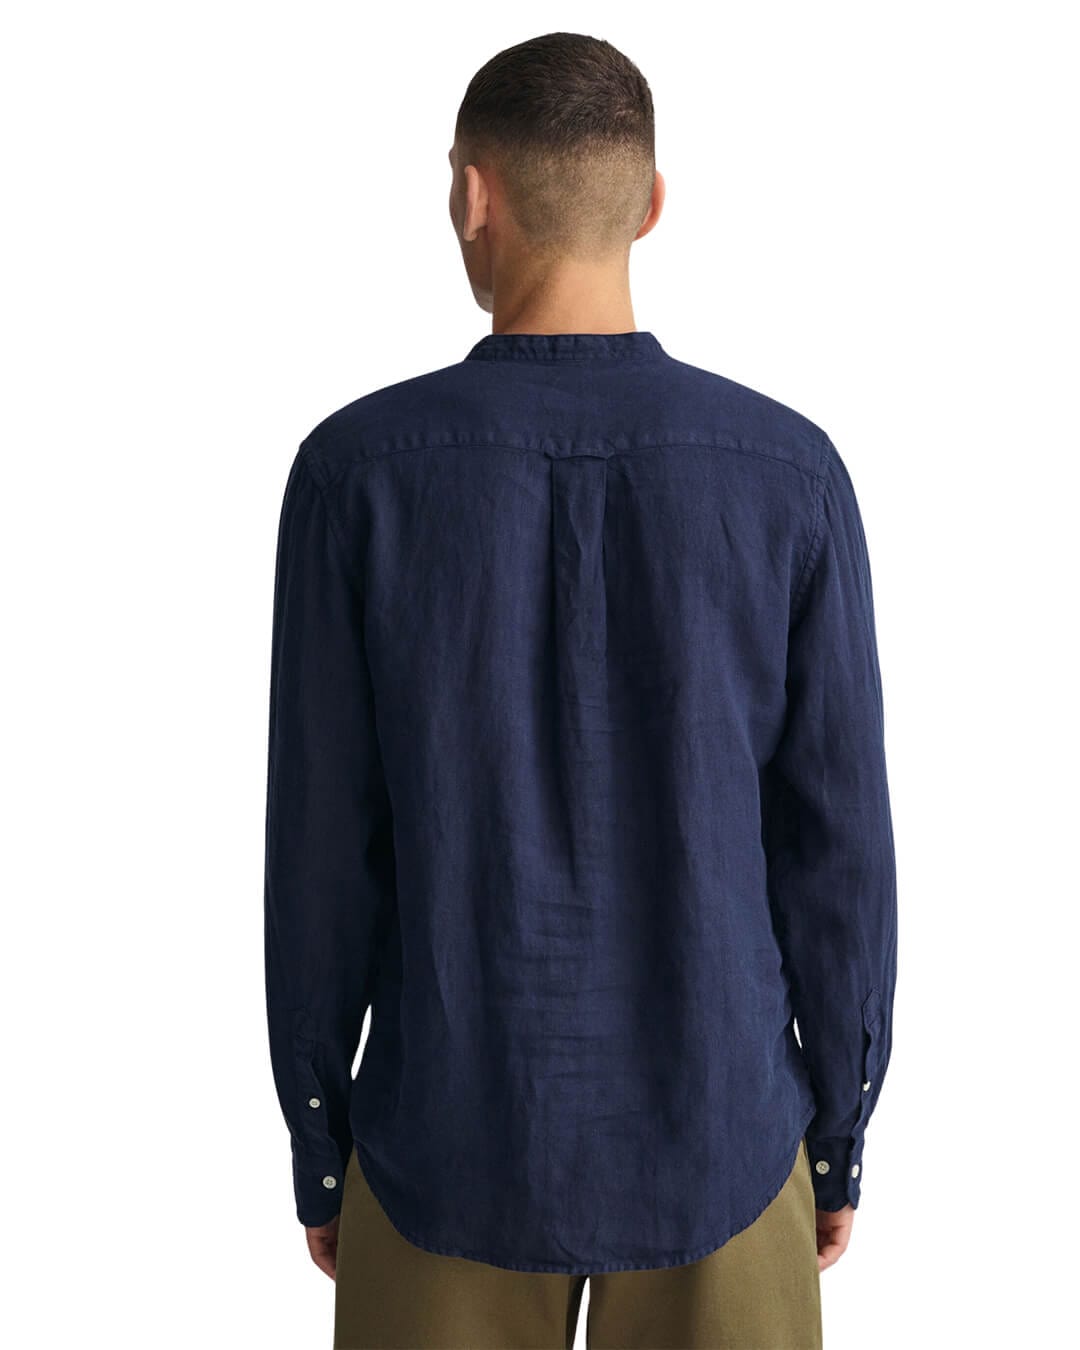 Gant Shirts Gant Marine Regular Fit Garment-Dyed Linen Shirt